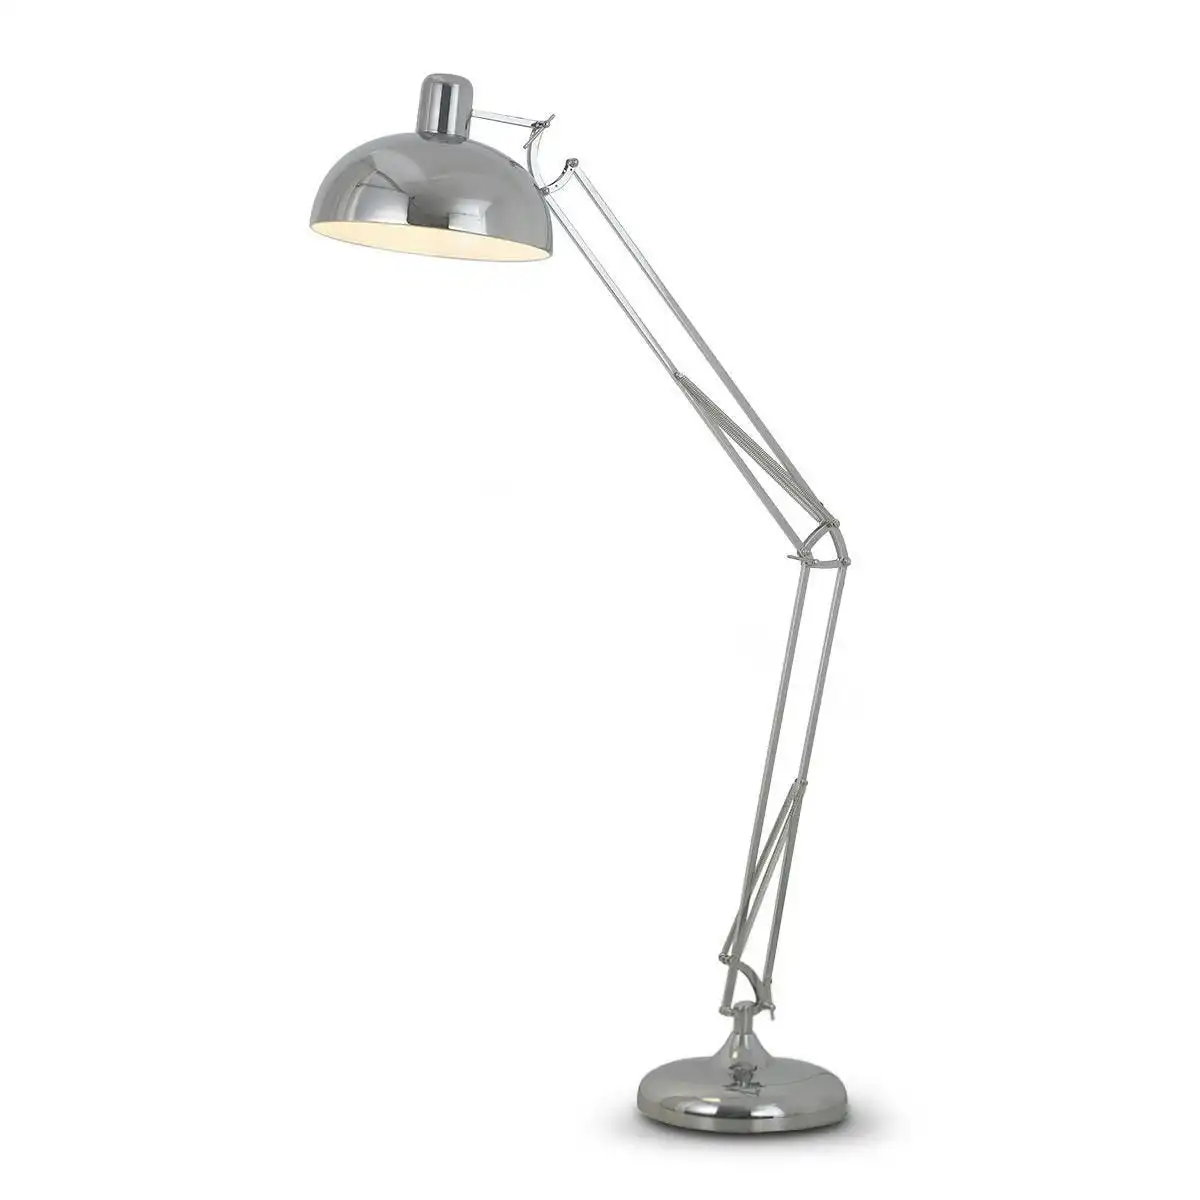 Metal Architect Floor Lamp Shade Adjustable Height   Chrome